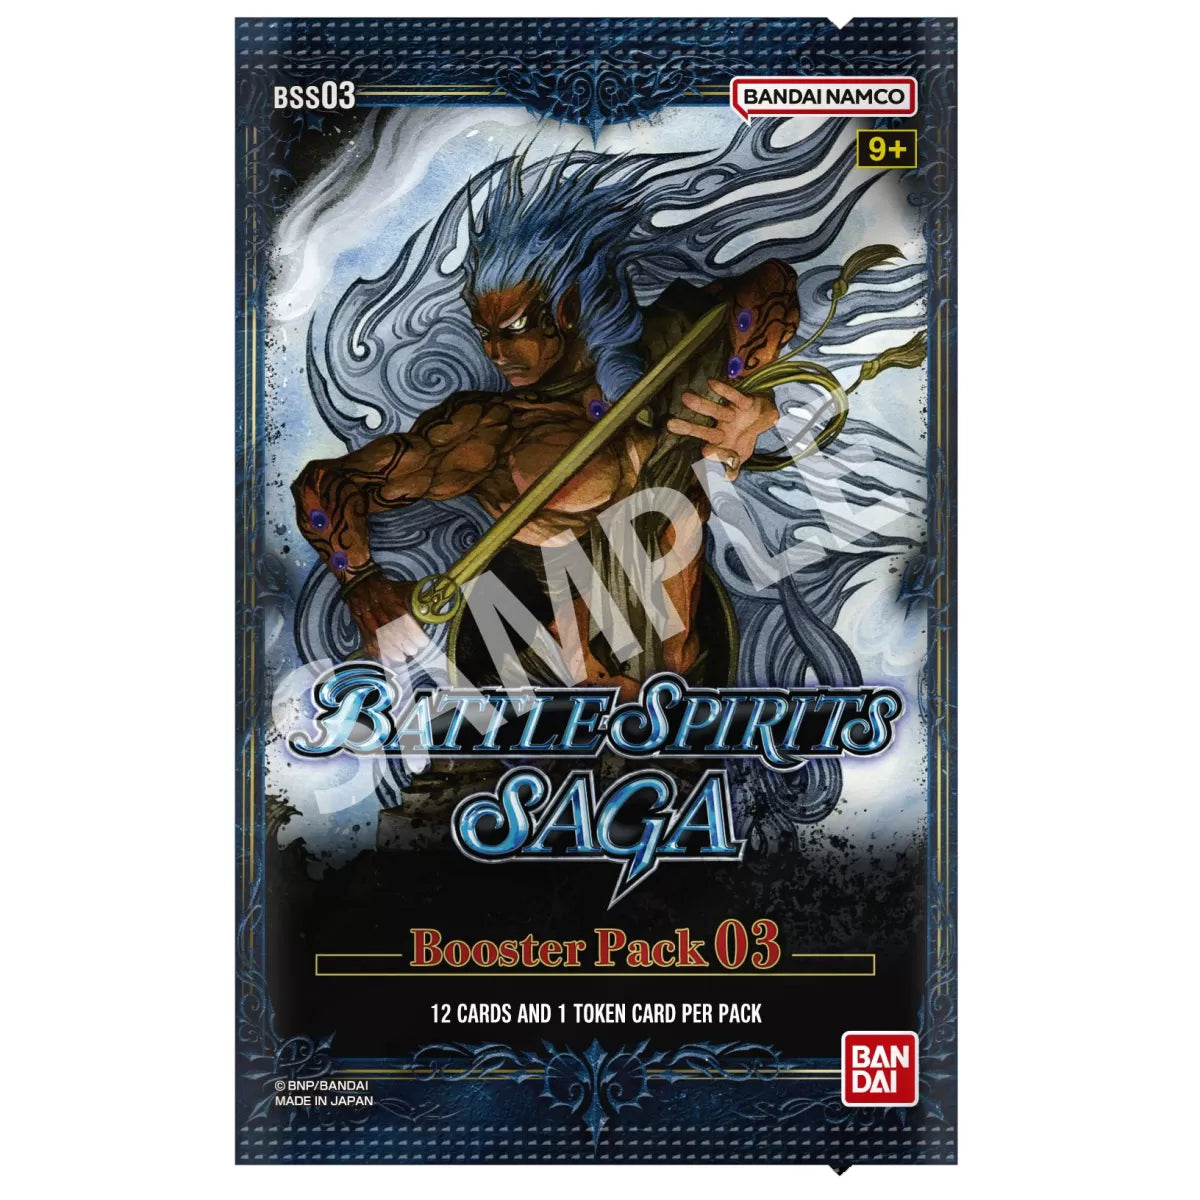 Battle Spirits Saga Card Game Set 03 Aquatic Invaders Booster Pack (BSS03)